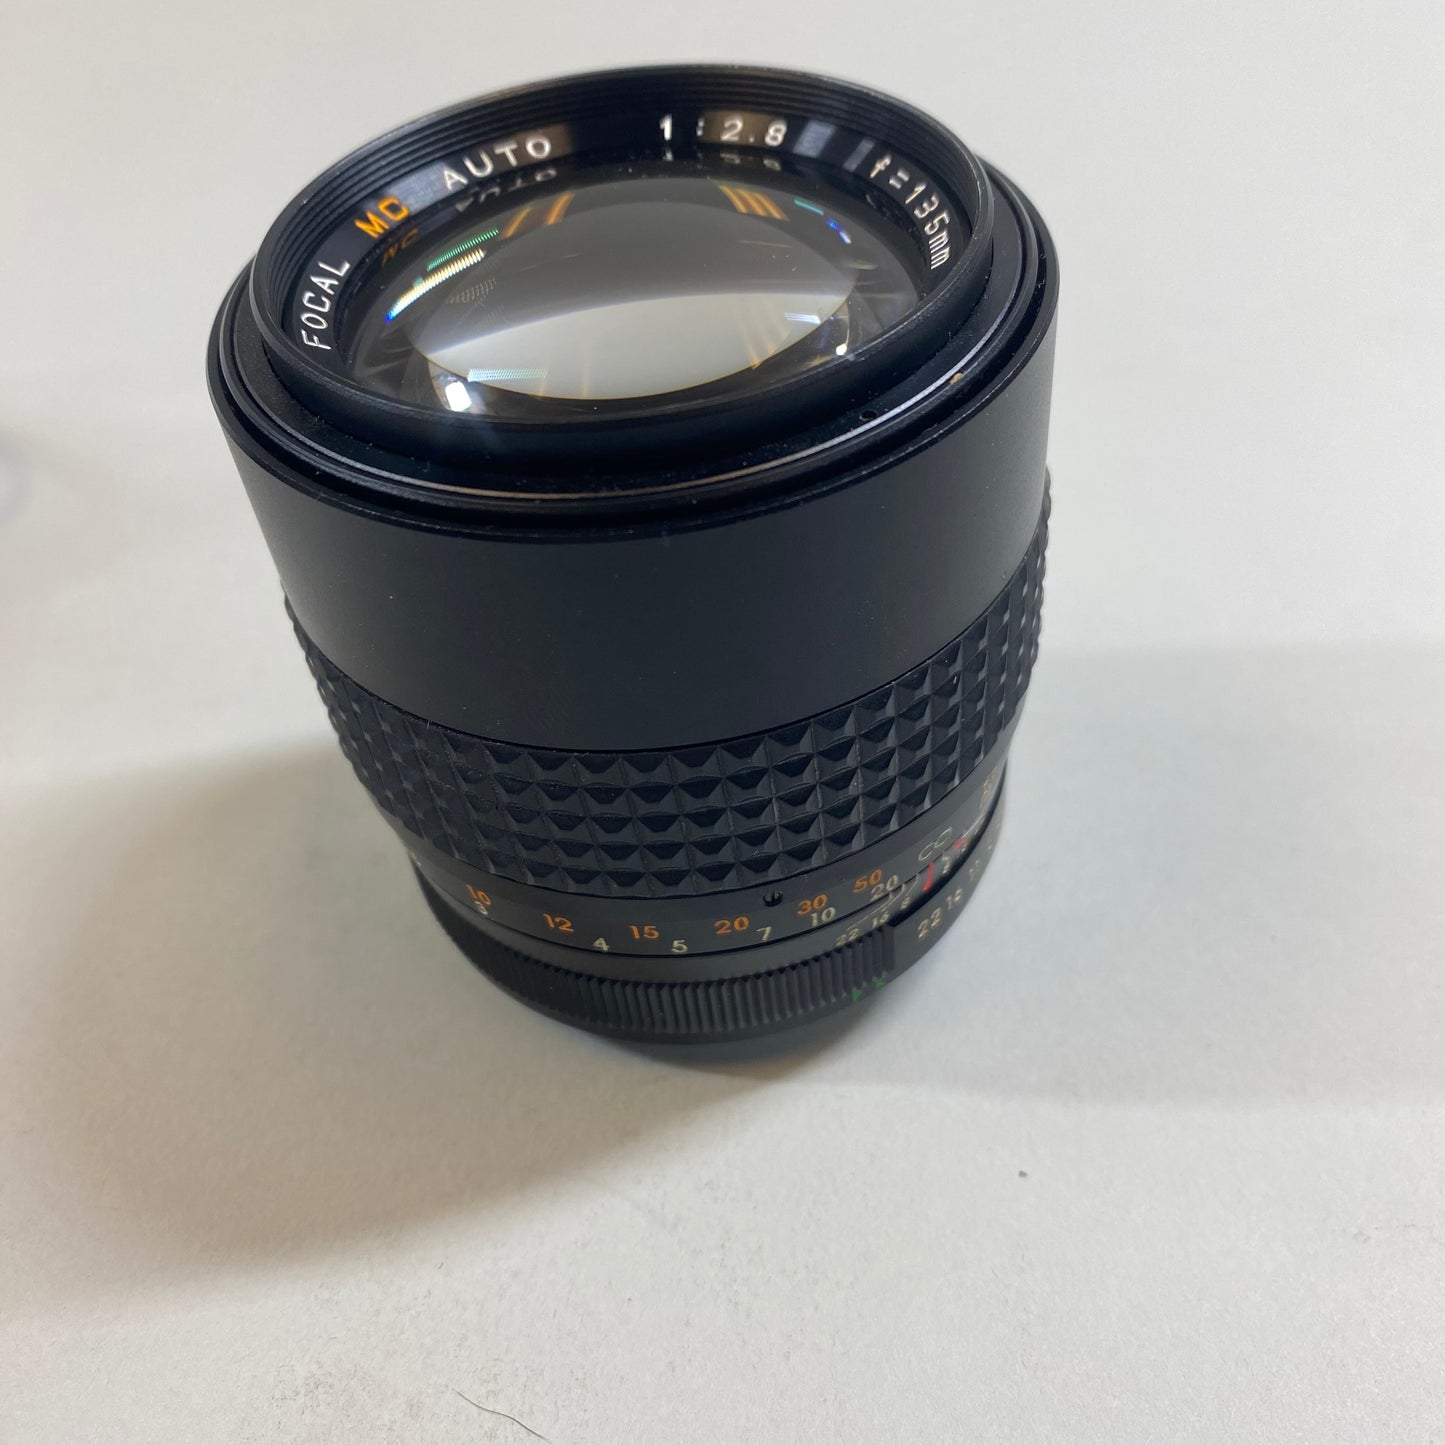 Pentax 135mm f/2.8  K Mount Telephoto Lens